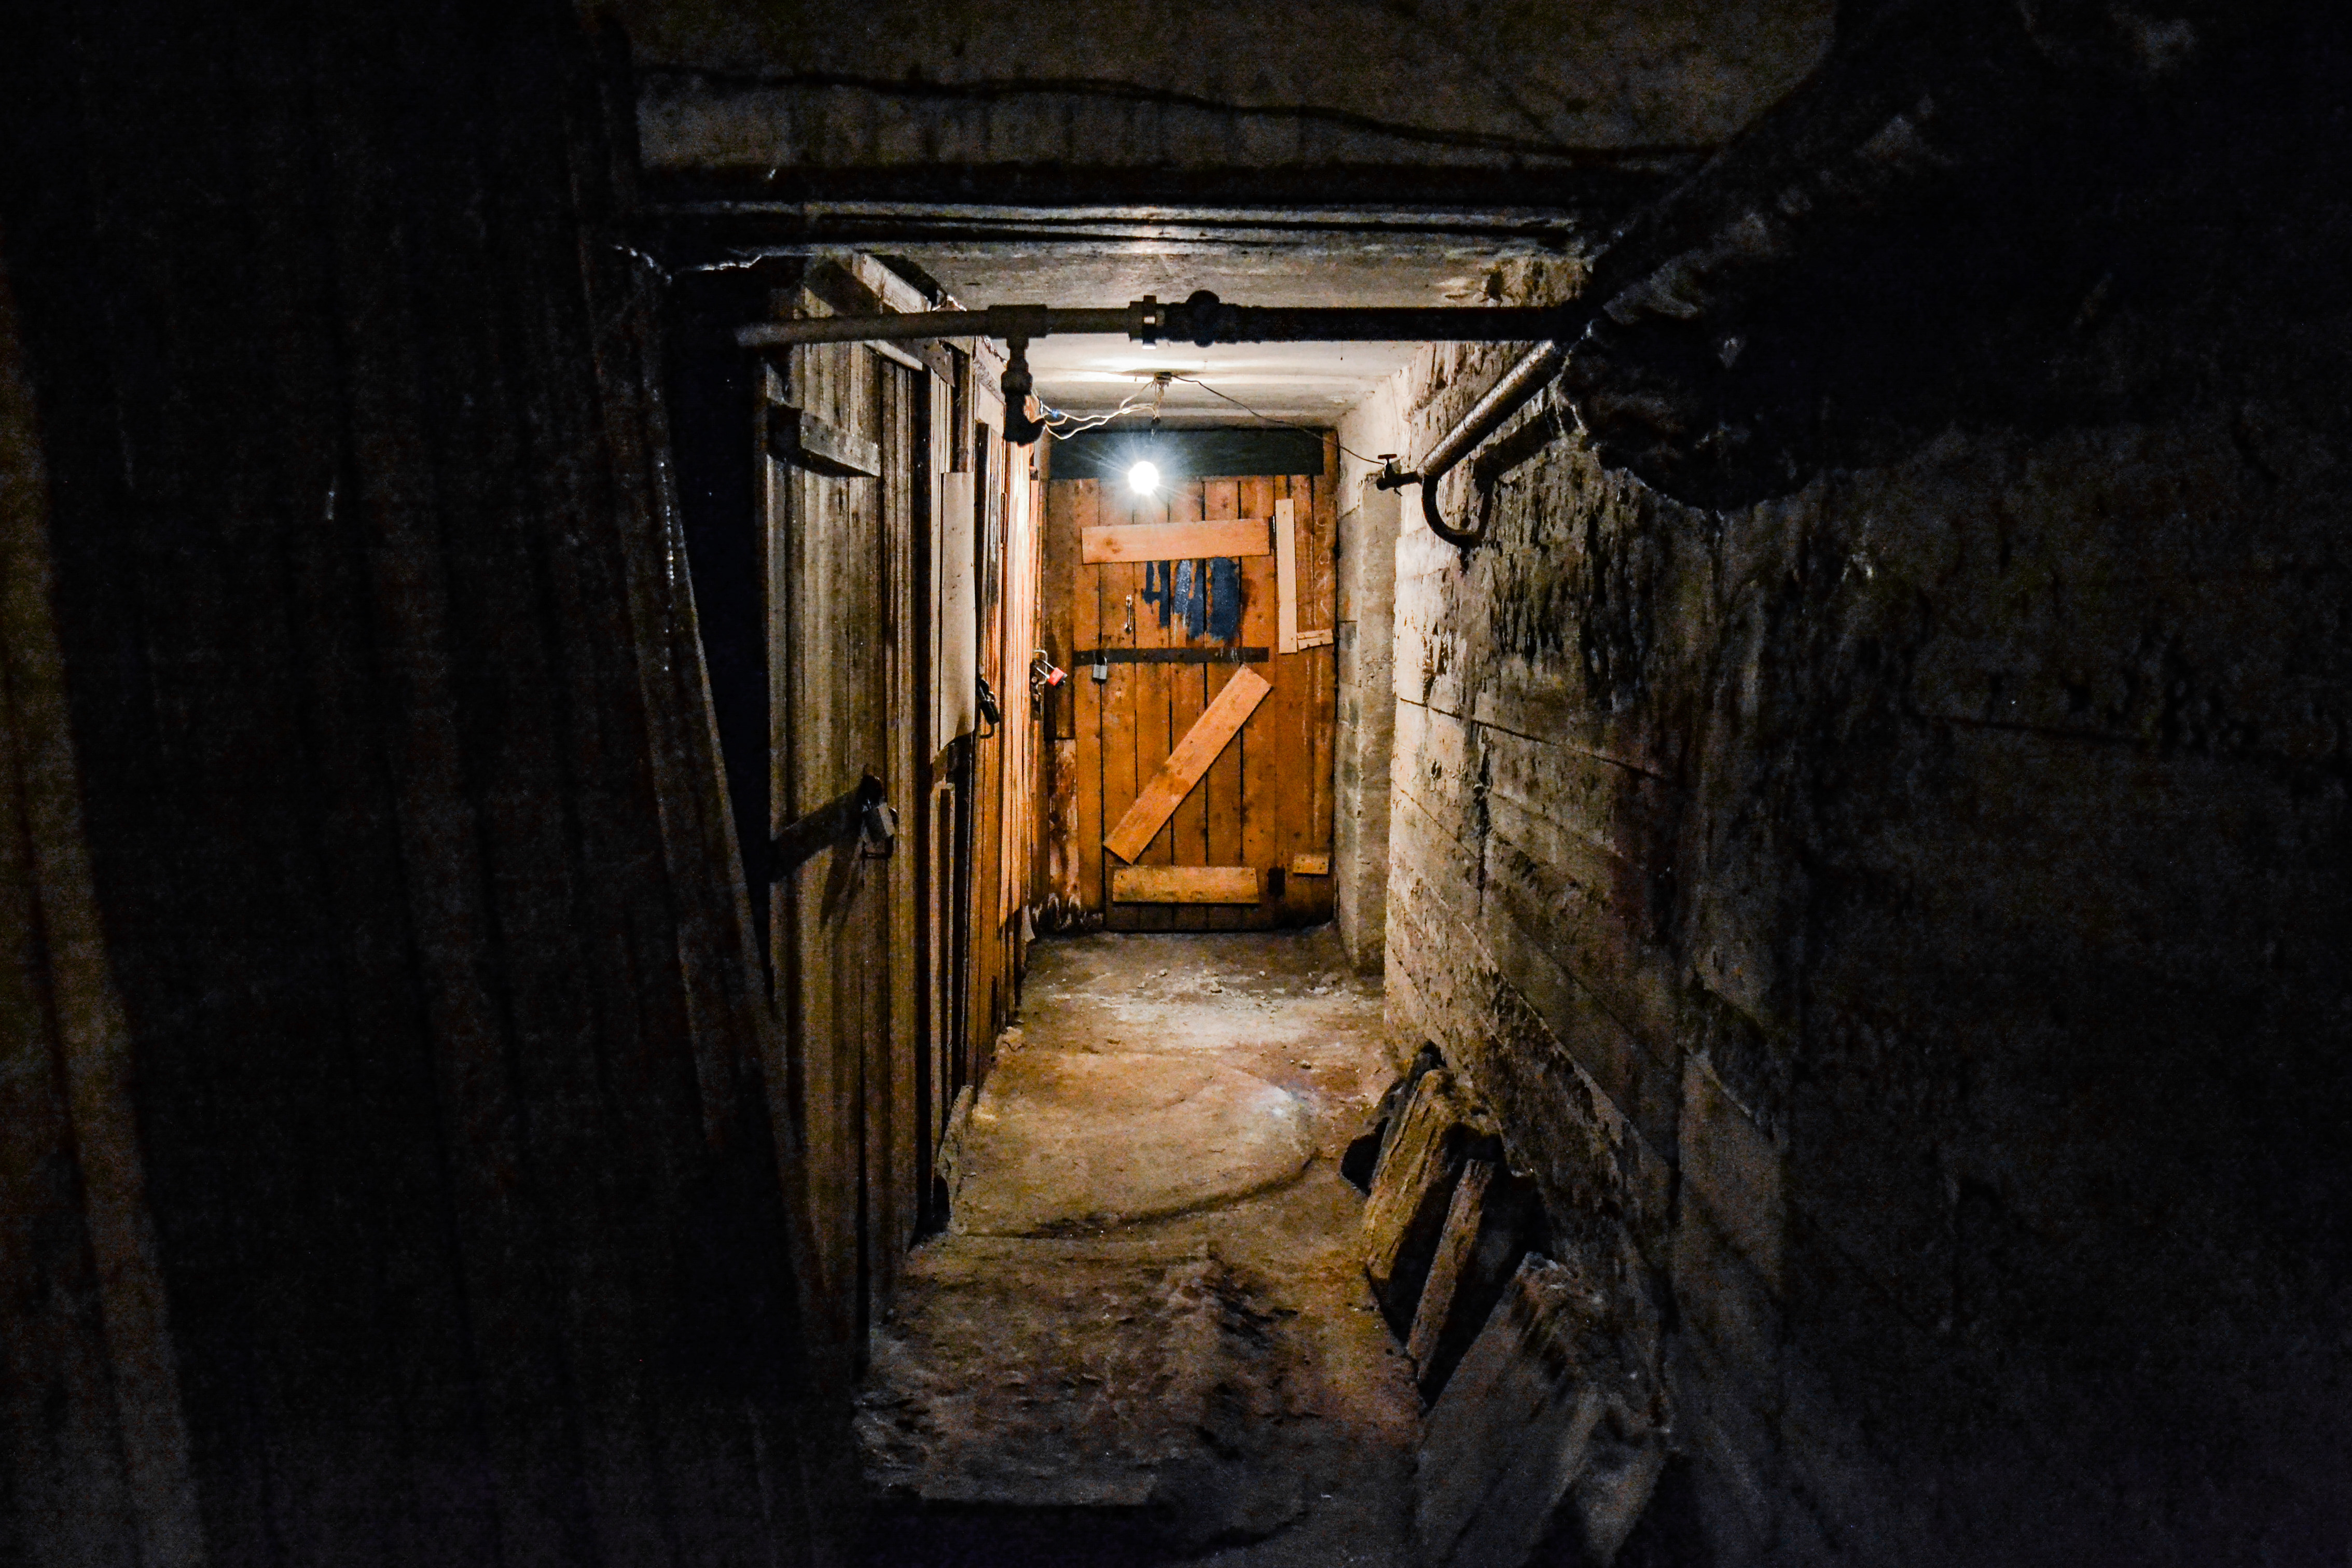 A scary dark concrete corridor in the basement | Source: Shutterstock.com